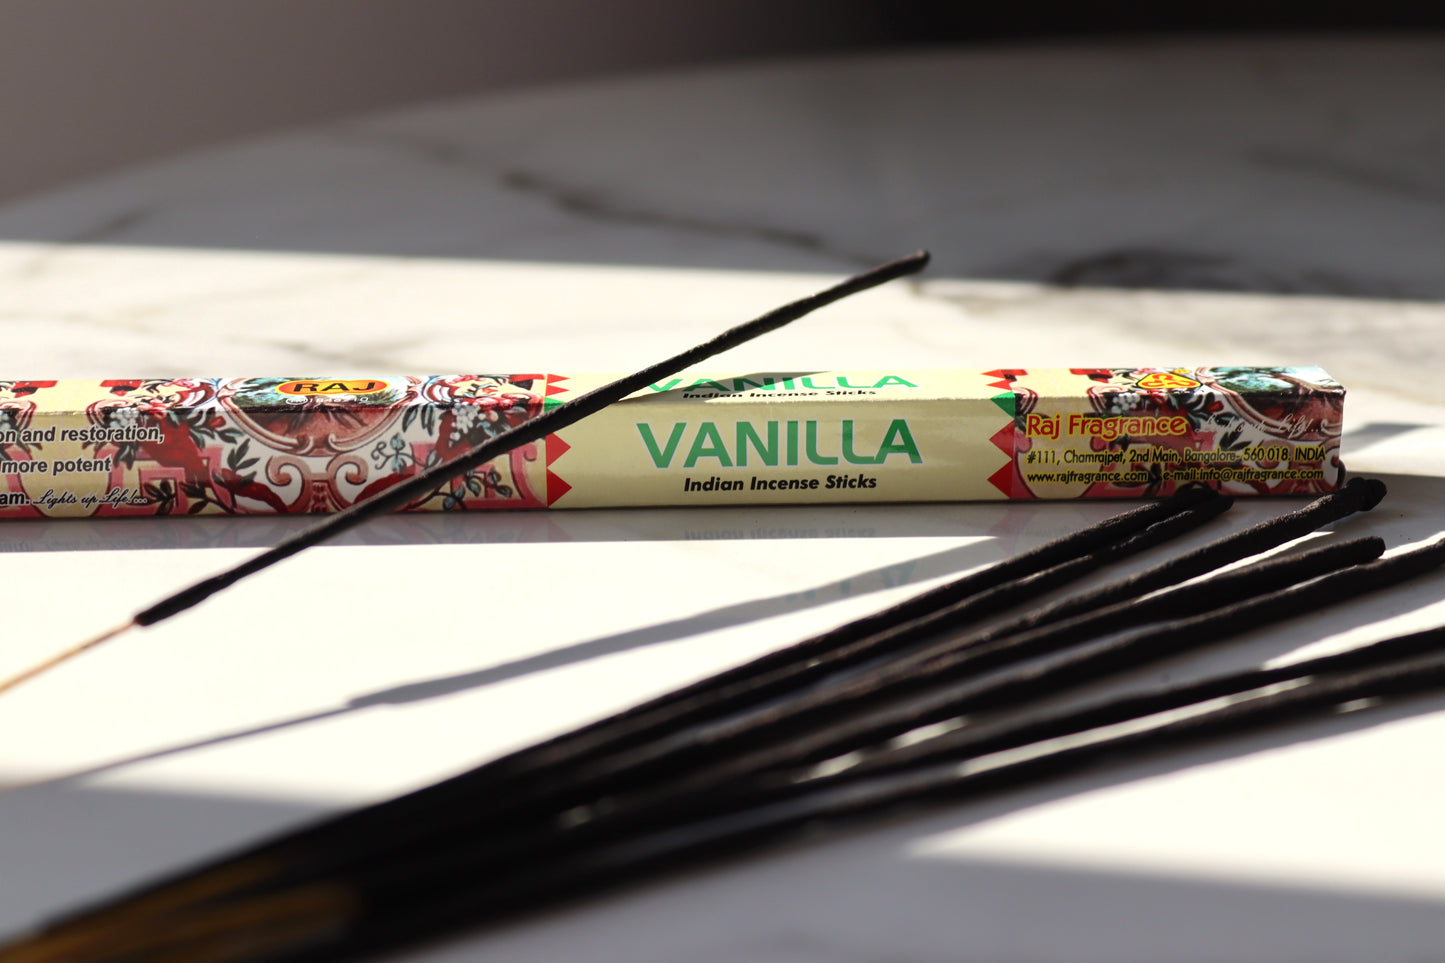 VANILLA incense sticks